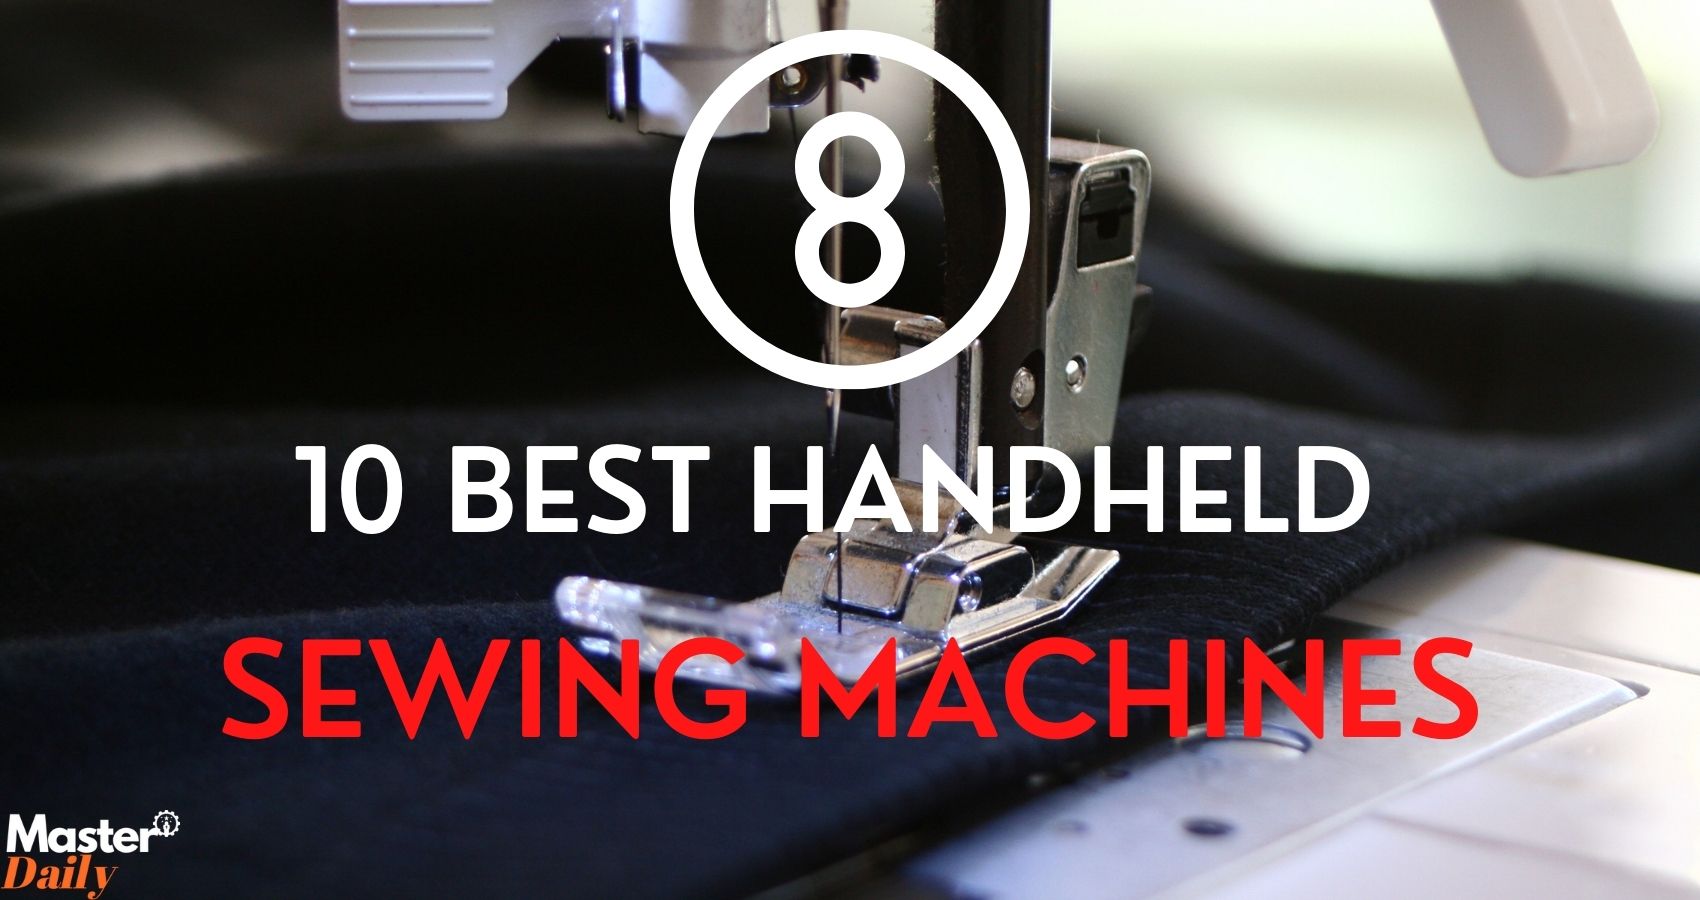 Handheld Sewing Machines